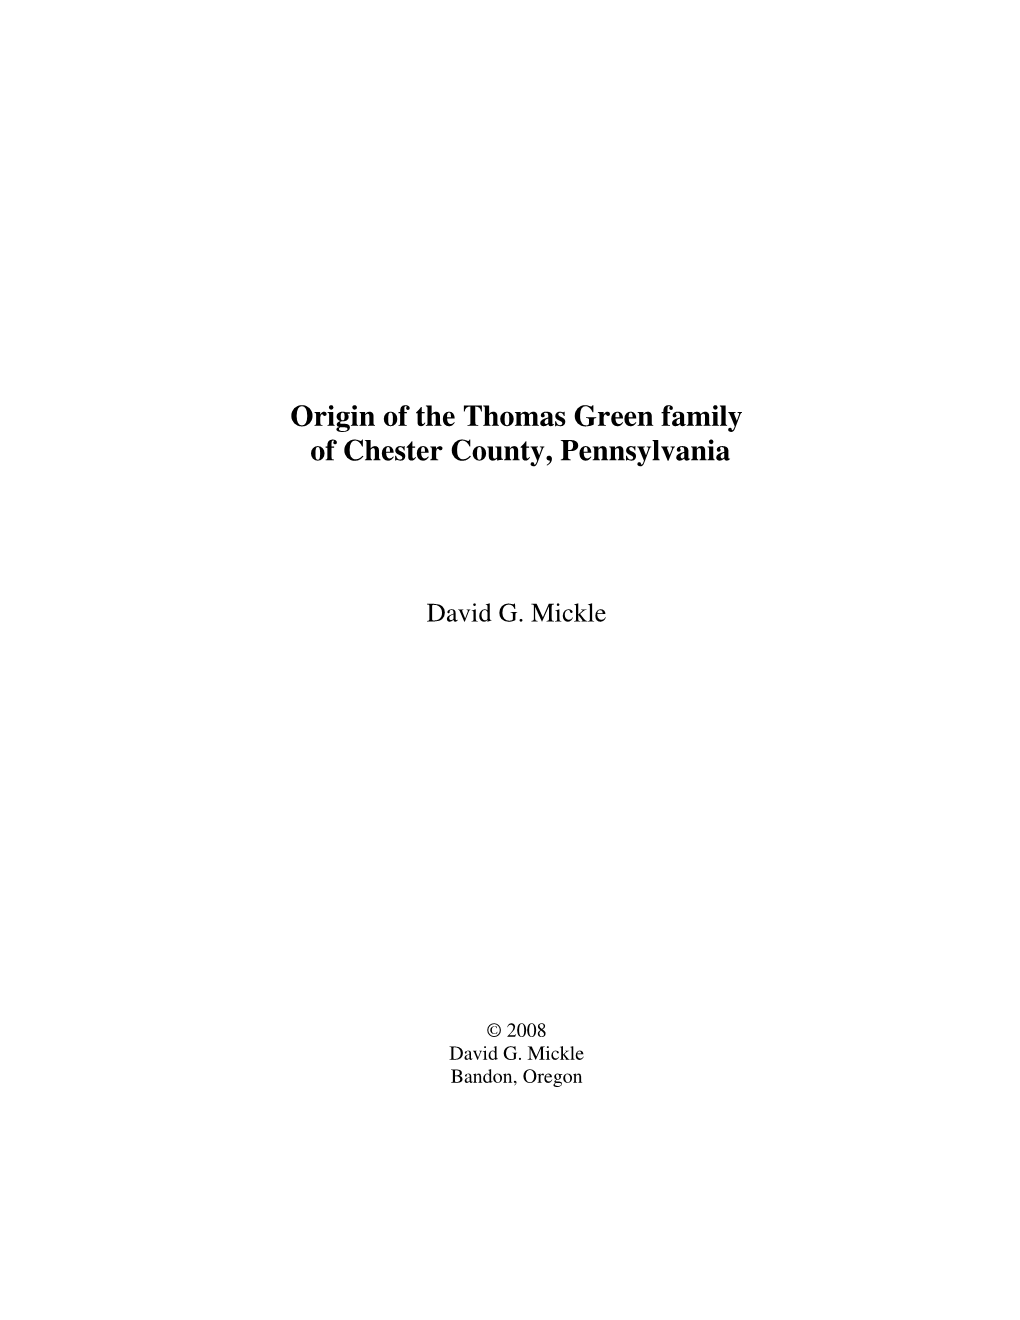 Origin of the Thomas Green Family of Chester County, Pennsylvania